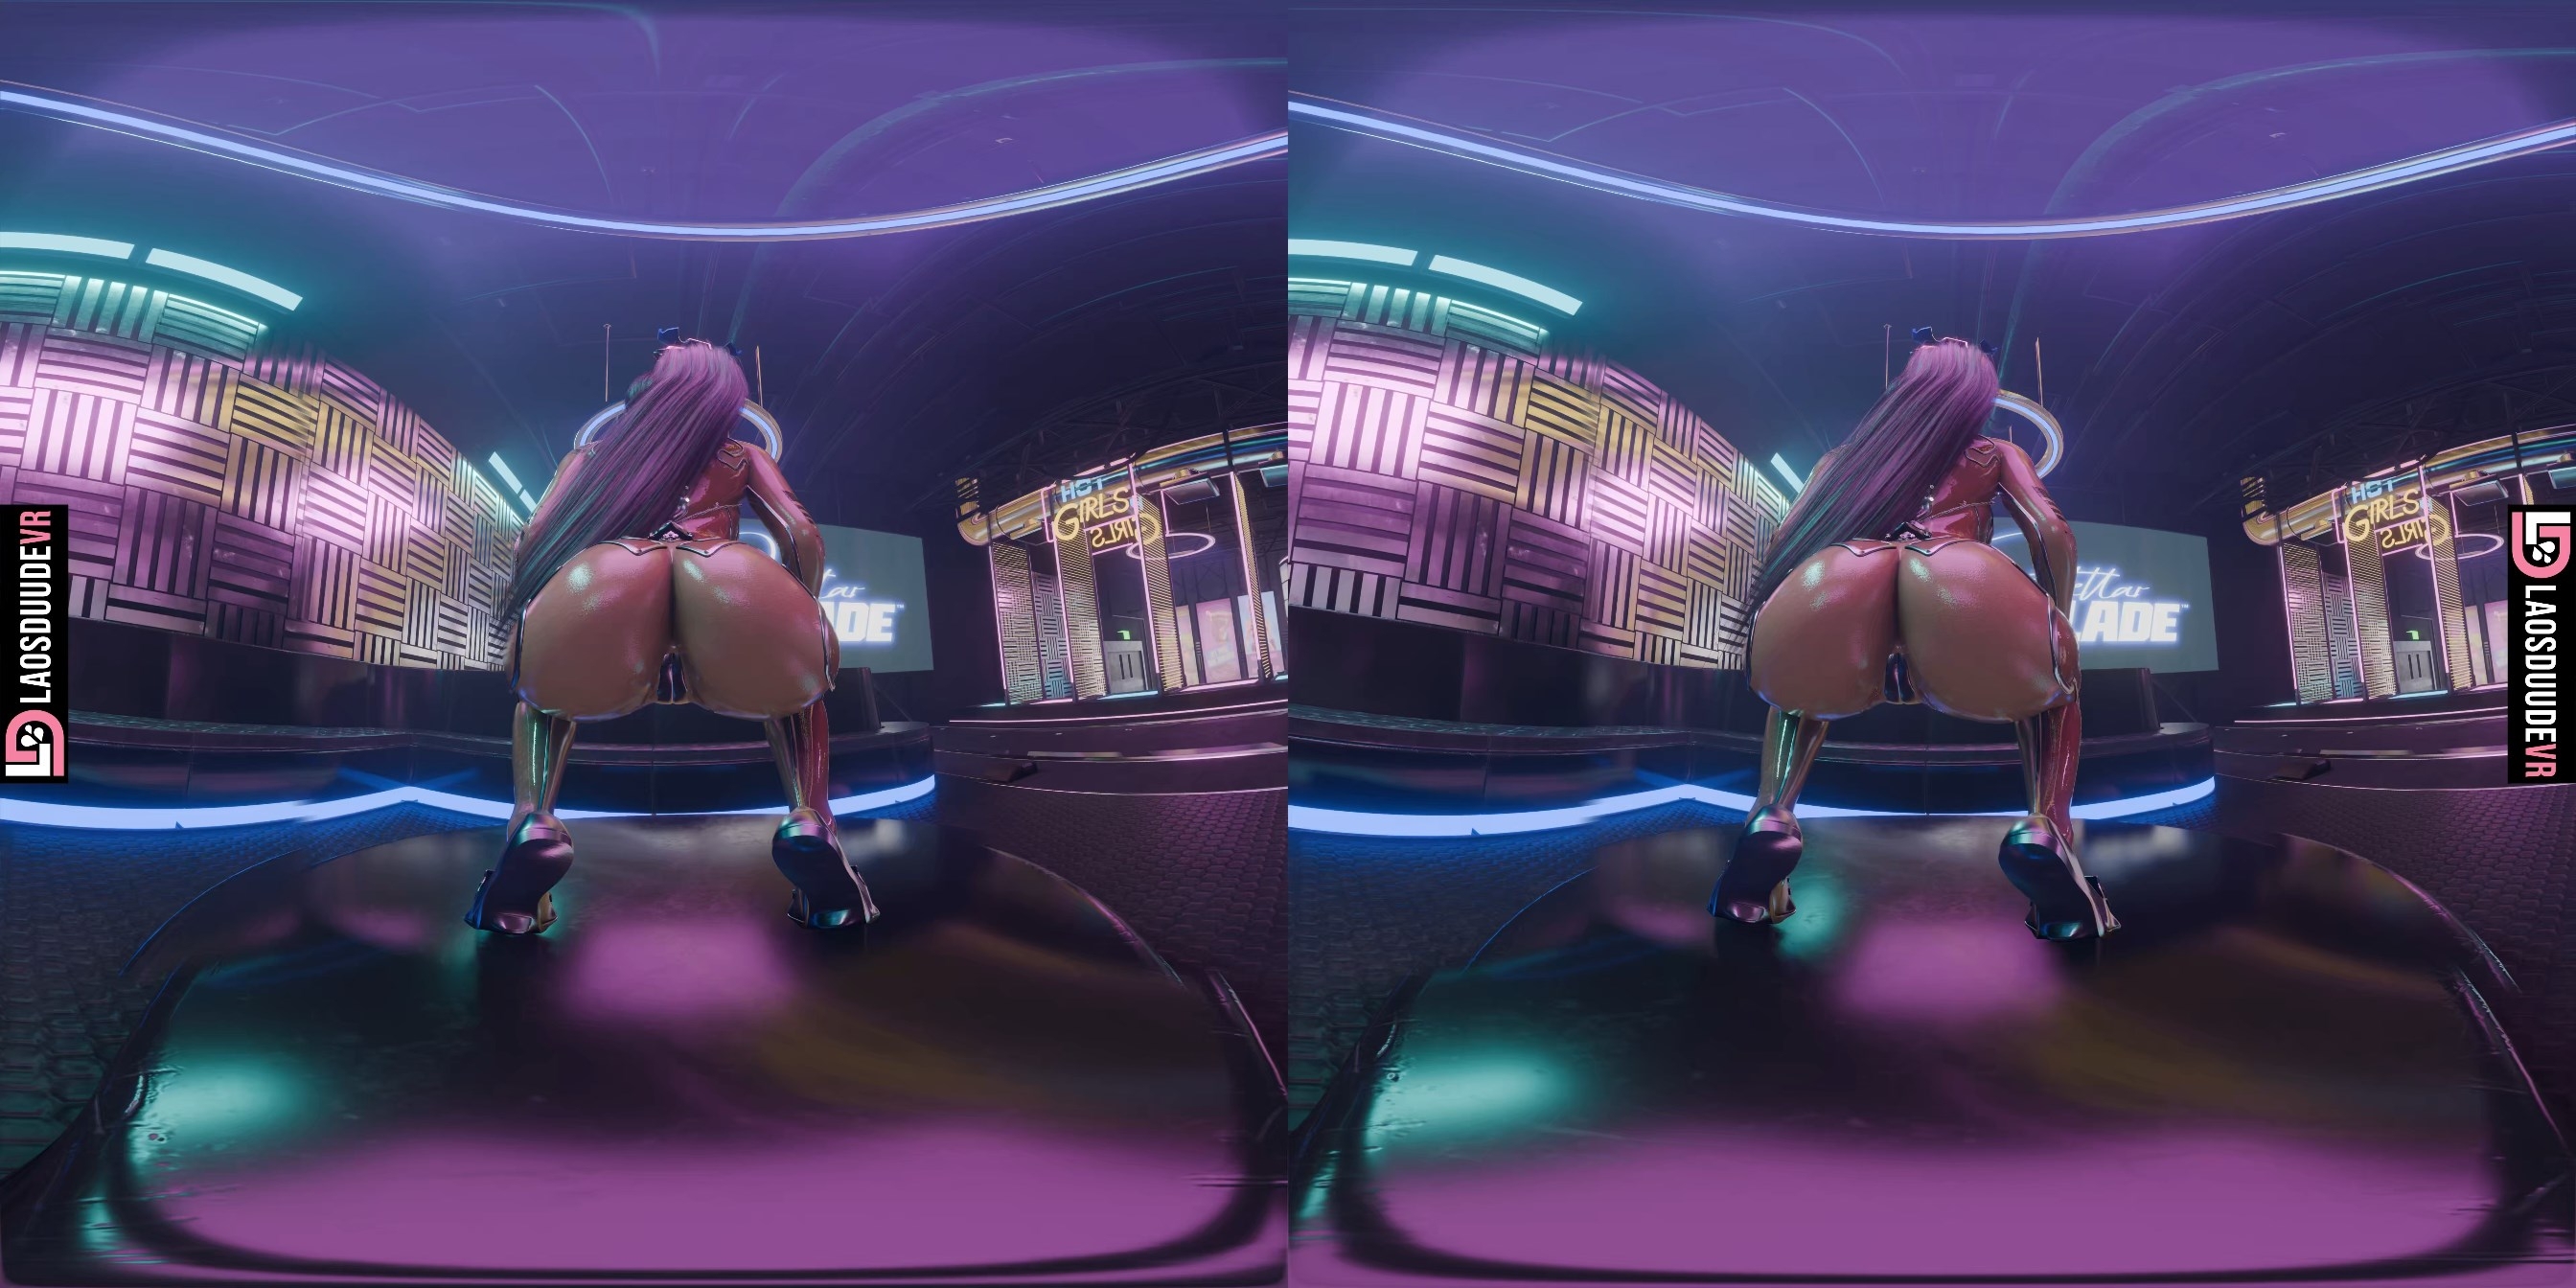 Eve Twerk + (VR For Subs)  Twerking Ass Dance 2